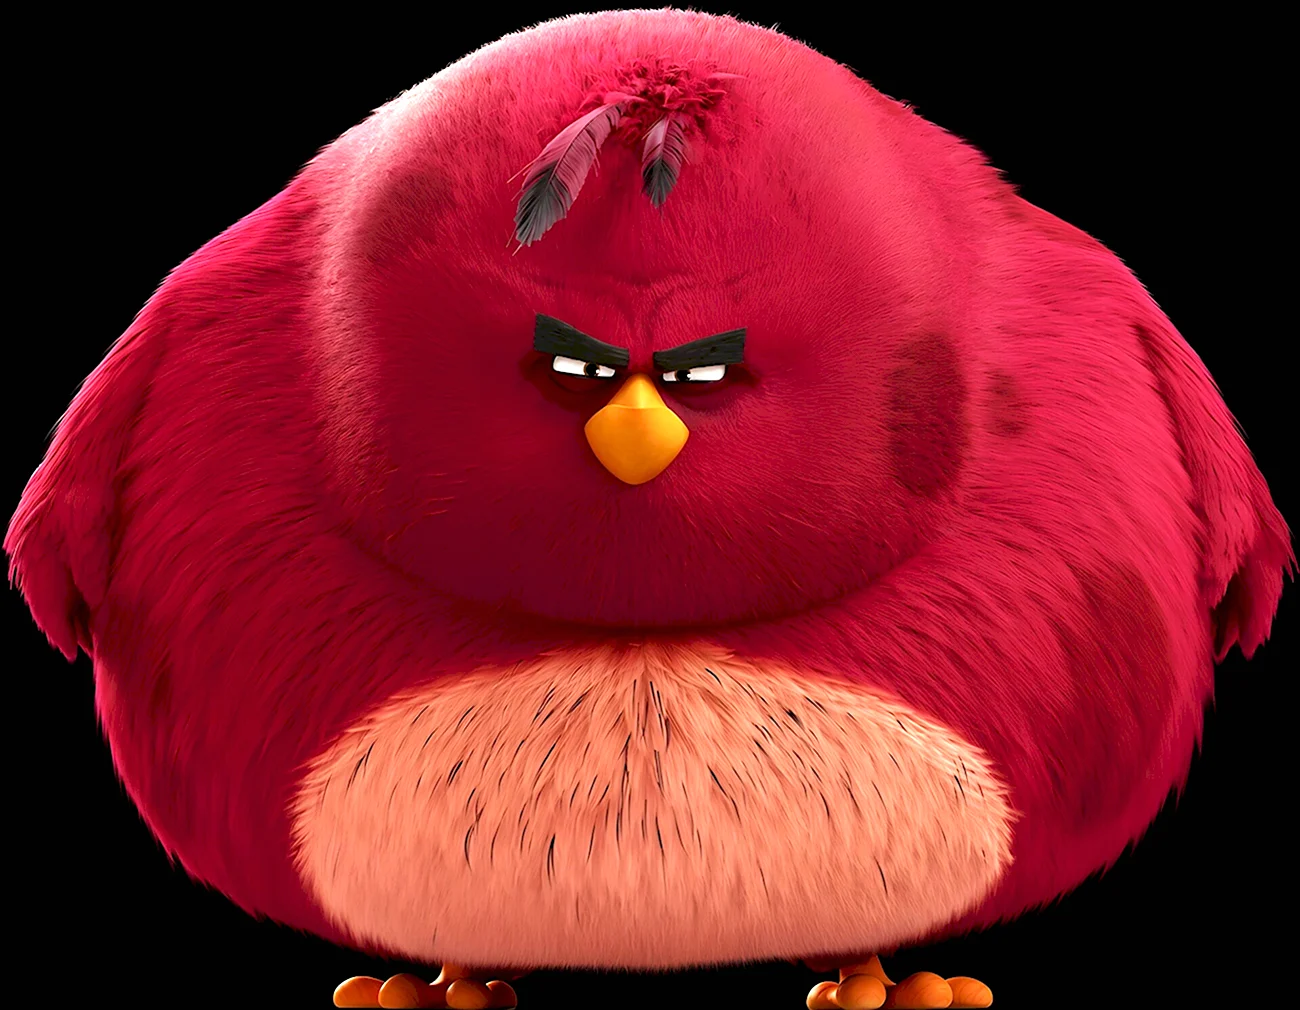 Теренс из Angry Birds. Картинка из мультфильма